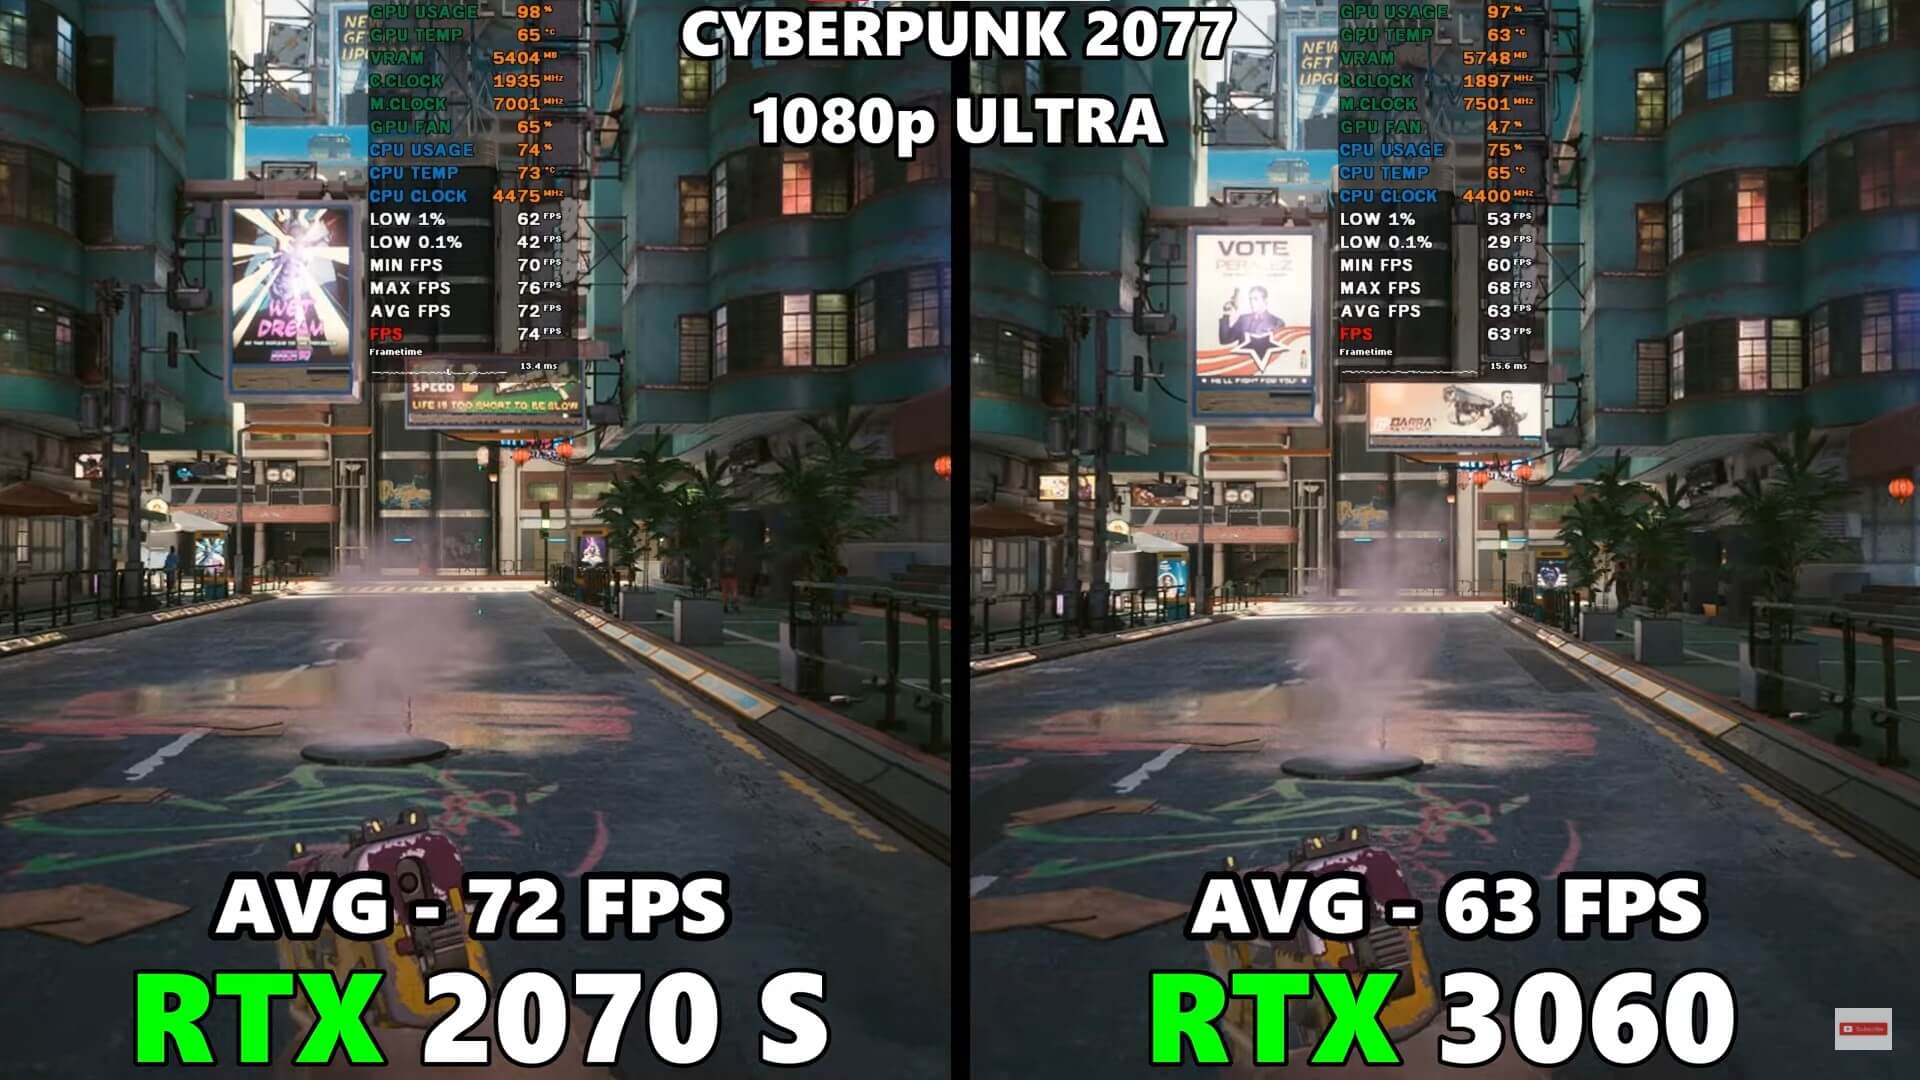 Cyberpunk 2077 performance for the RTX 2070 Super Vs. 3060.